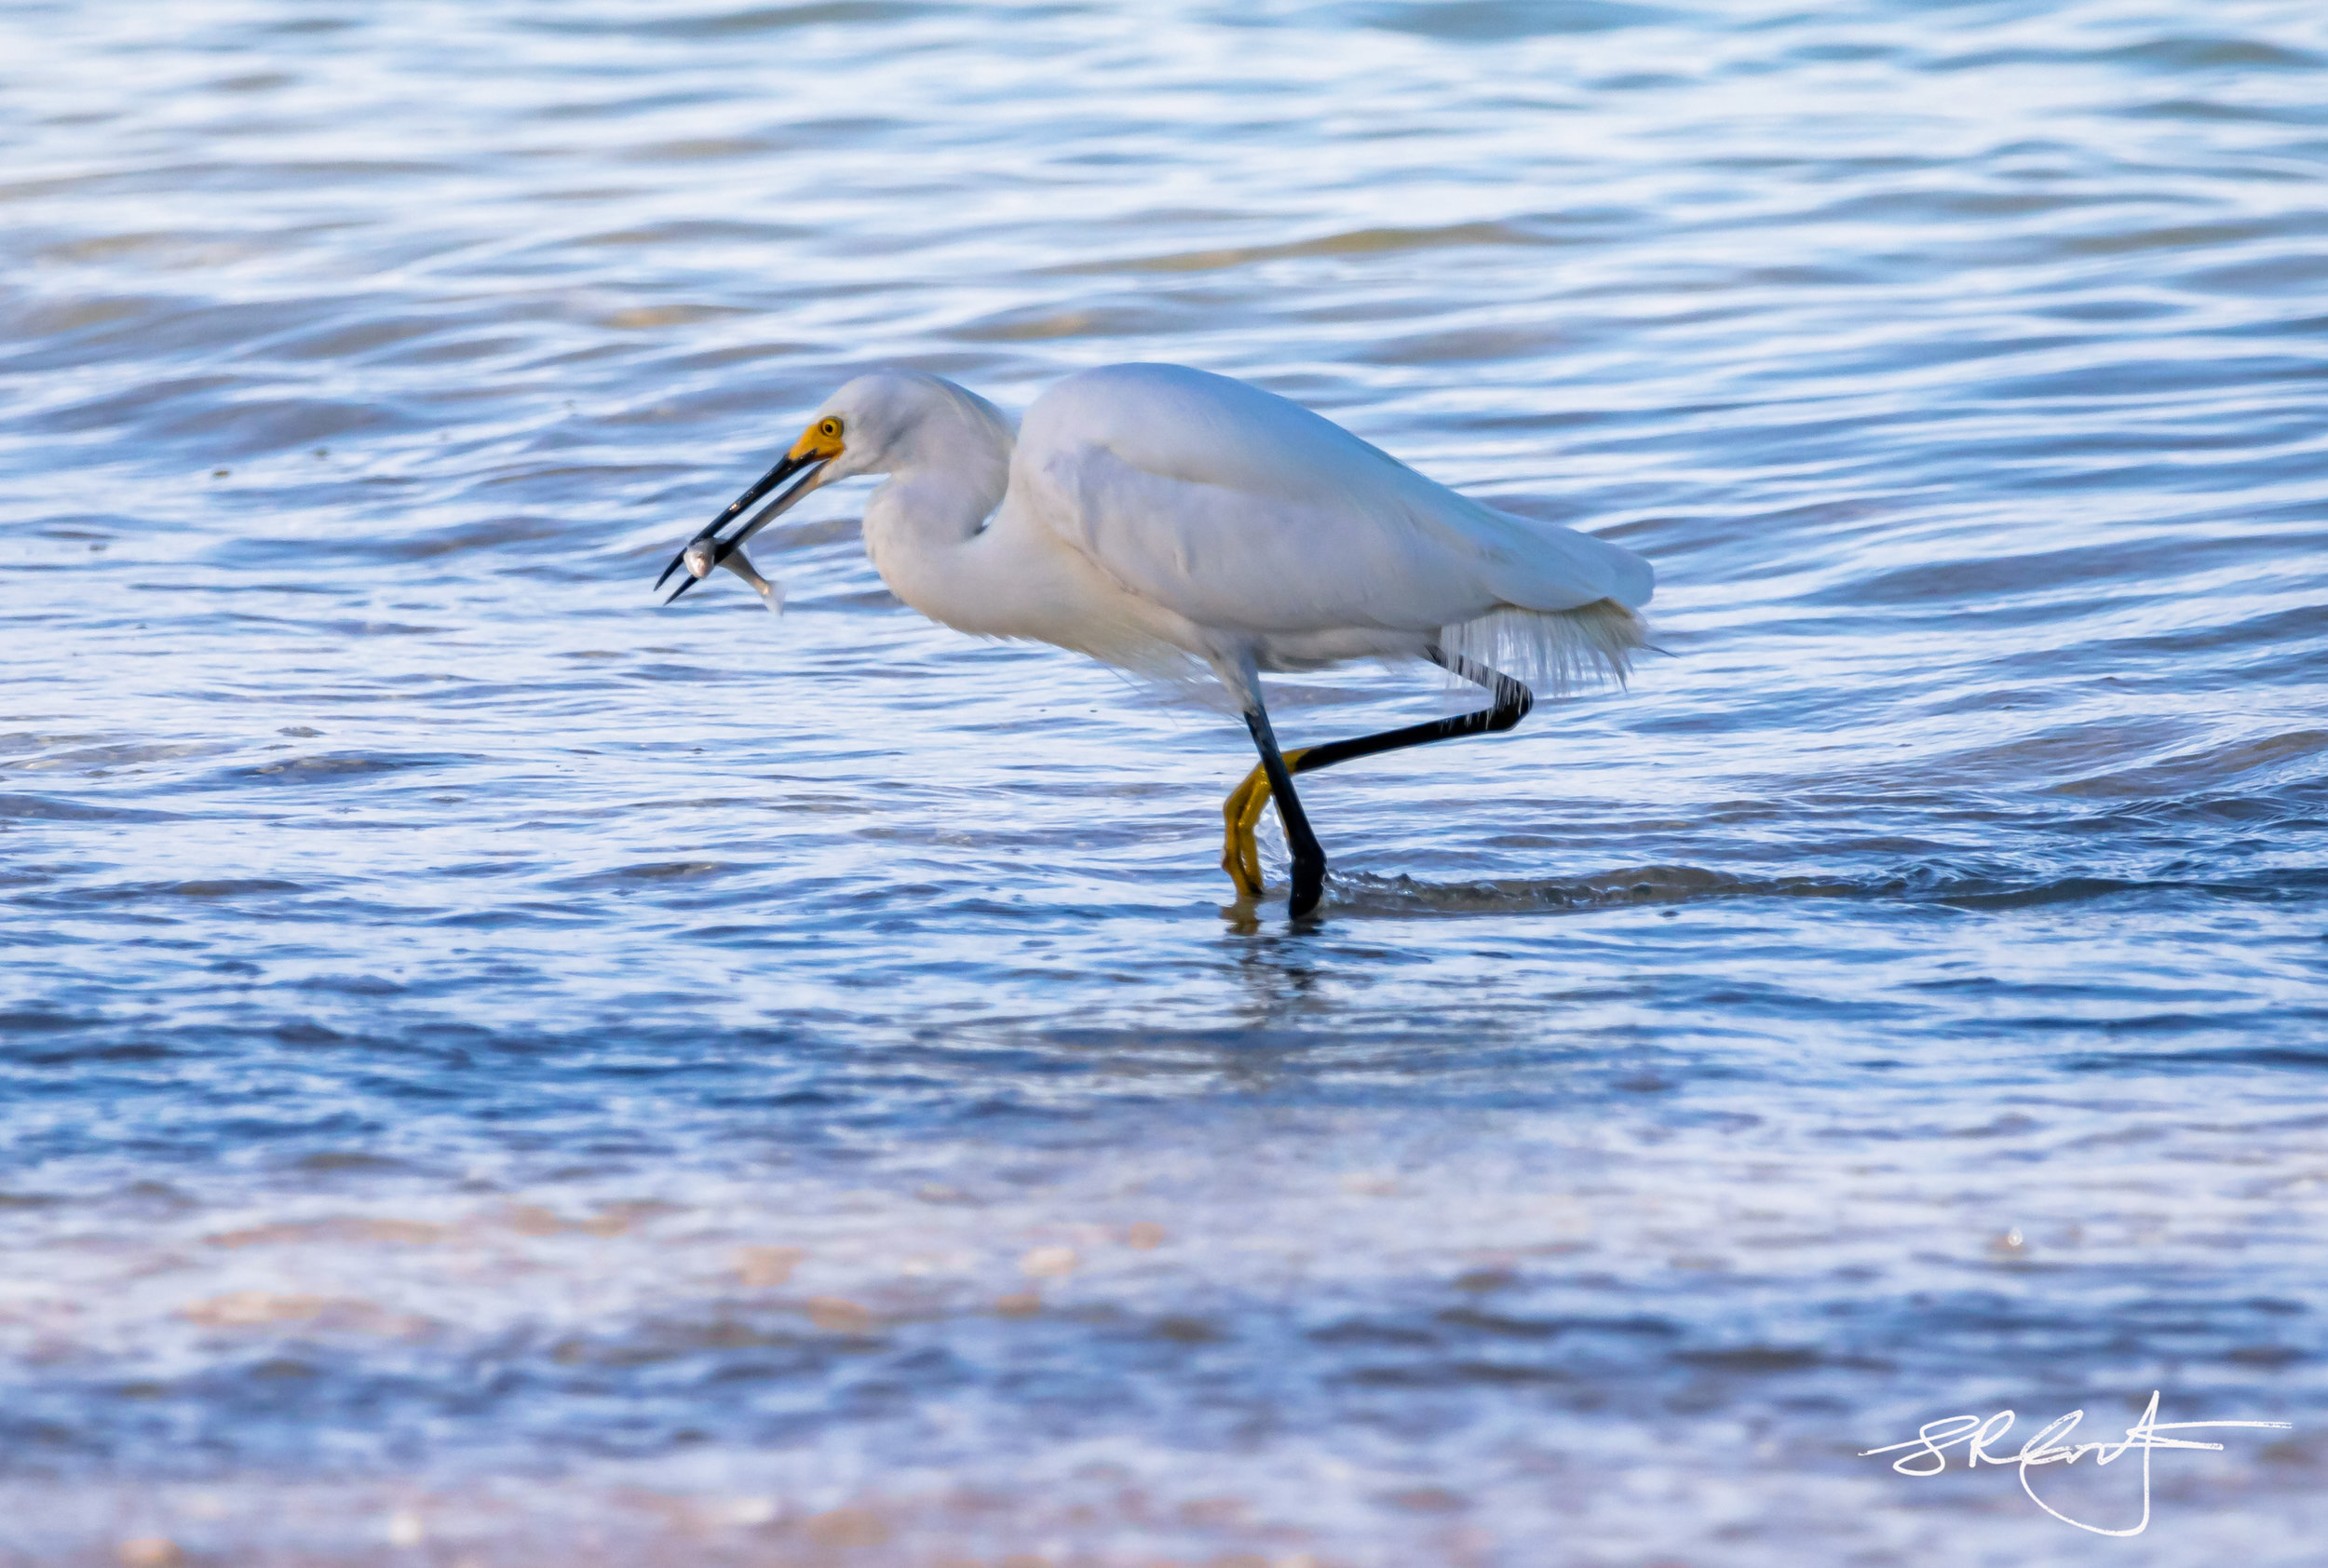 Snowy Egret catches his breakfast.